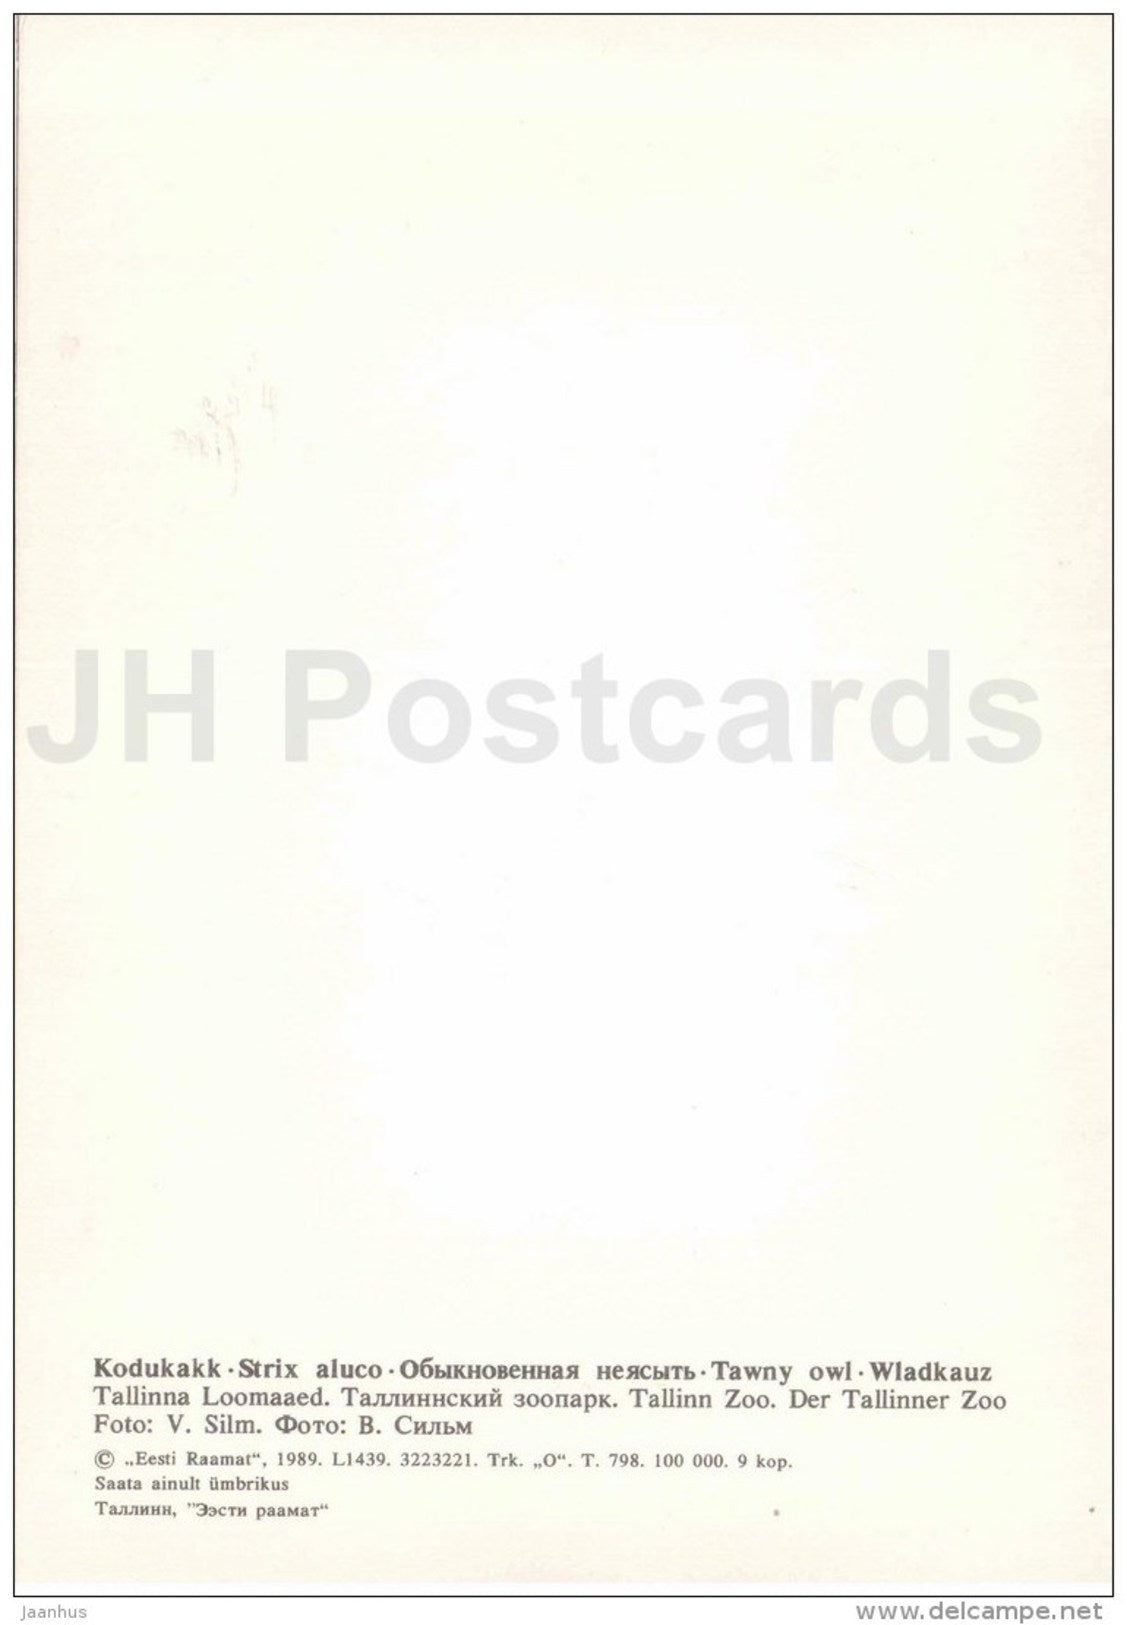 Tawny owl - Strix aluco - bird - large format card - Tallinn Zoo 50 - 1989 - Estonia USSR - unused - JH Postcards